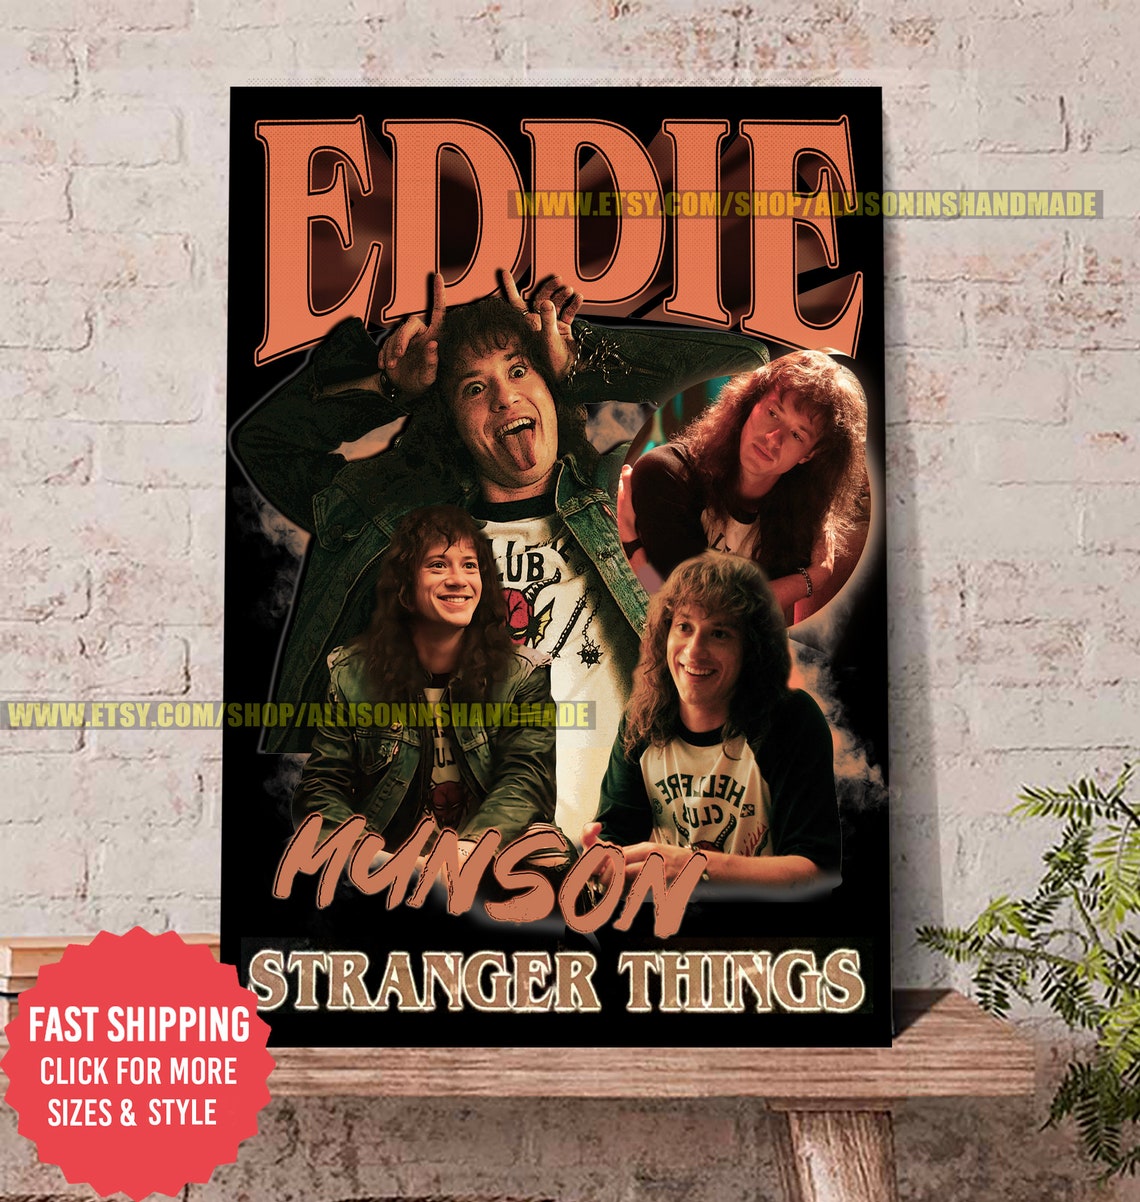 Eddie Muson ST4 Poster, Eddie  Stranger Things Poster, Stranger Things Print Poster, New stranger Things Poster, 